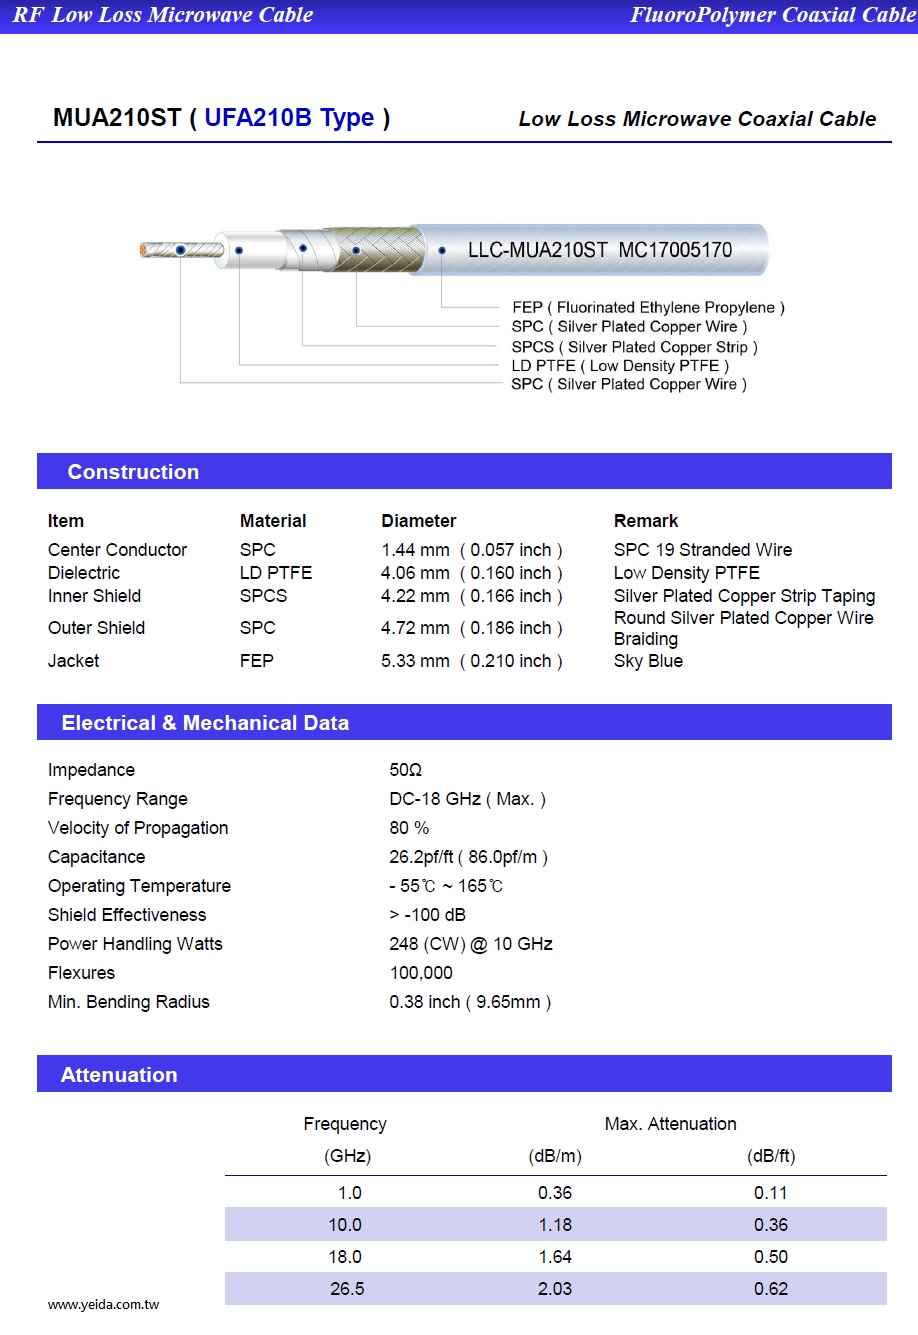 YMHD-MUA210ST (UFA210B Type ) Low Loss RF Microwave Coaxial Cable 鐵氟龍耐高溫(雙層鍍銀屏蔽隔離)低損耗射頻微波(26.5G)同軸電纜產品圖